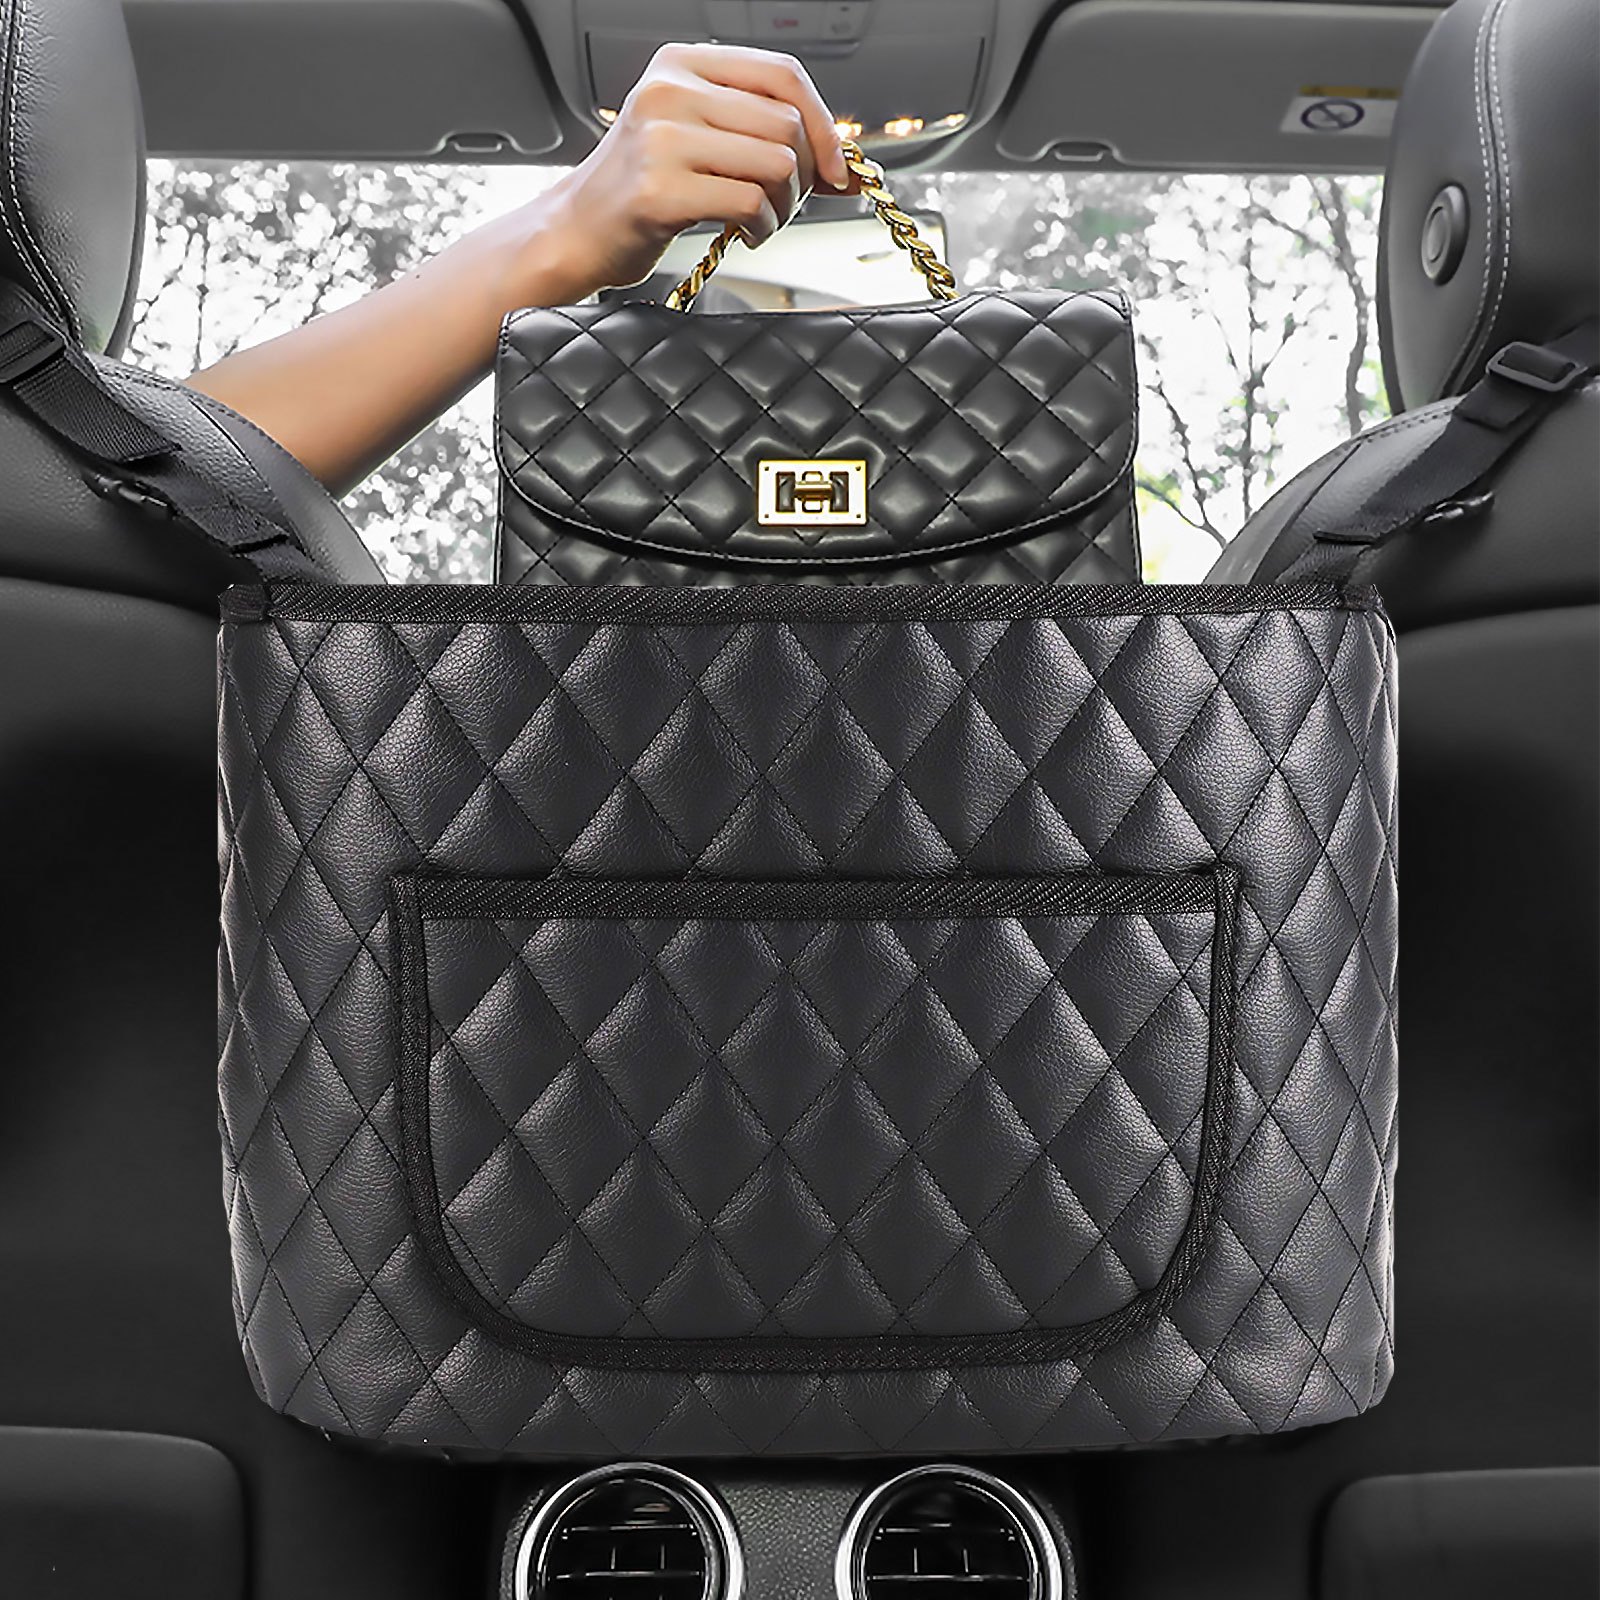  AMEIQ Car Organizer, Storage Bag Between Front Seats, Car Purse  Holder, Handbag Tissue Holder, Dog Pet Barrier, Pocket Container, Black  Leather : Automotive